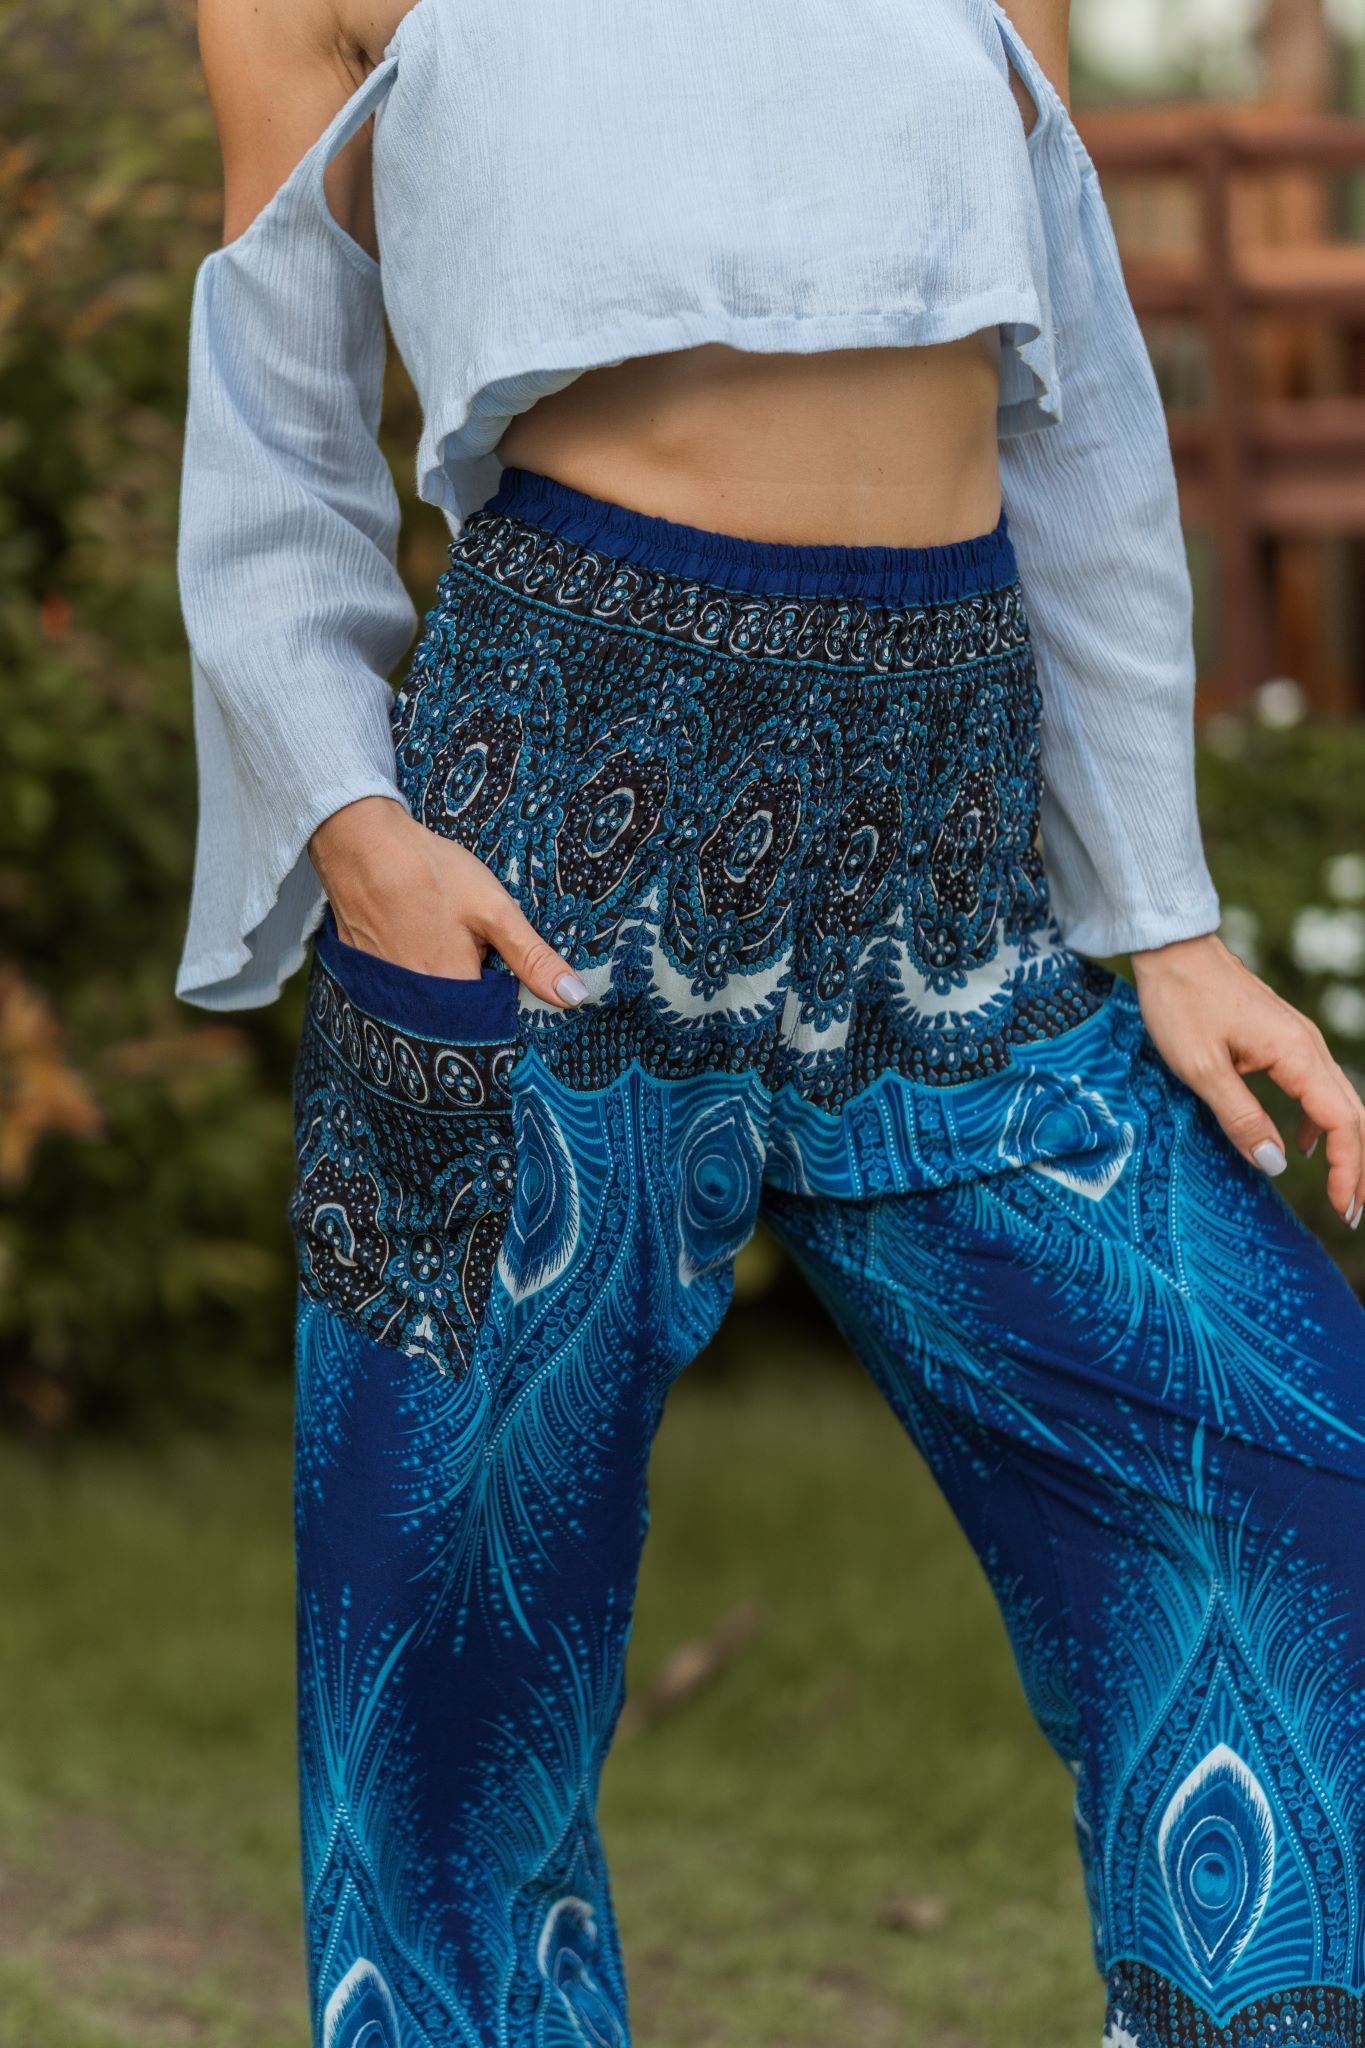 High Crotch Harem Pants - Vibrant Peacock Feather Print - Bright Blue